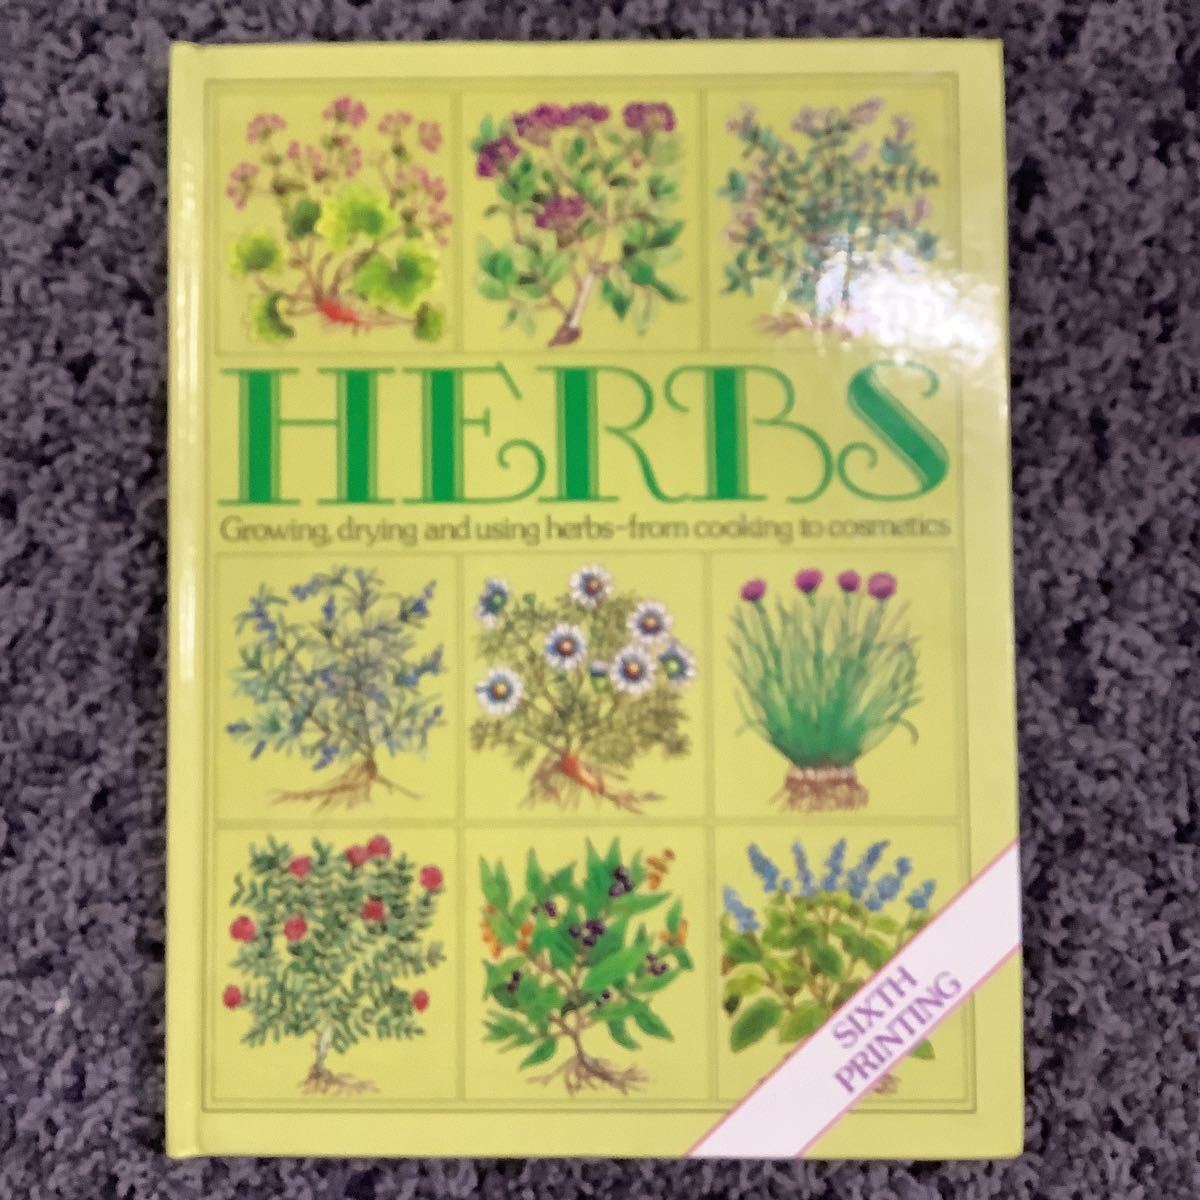  проблема есть .книга@HERBS Growing,drying and sing herbs~from cooking to cosmetics SIXTH PRINTING Marshall Cavendish ISBN 0 85685 087 X